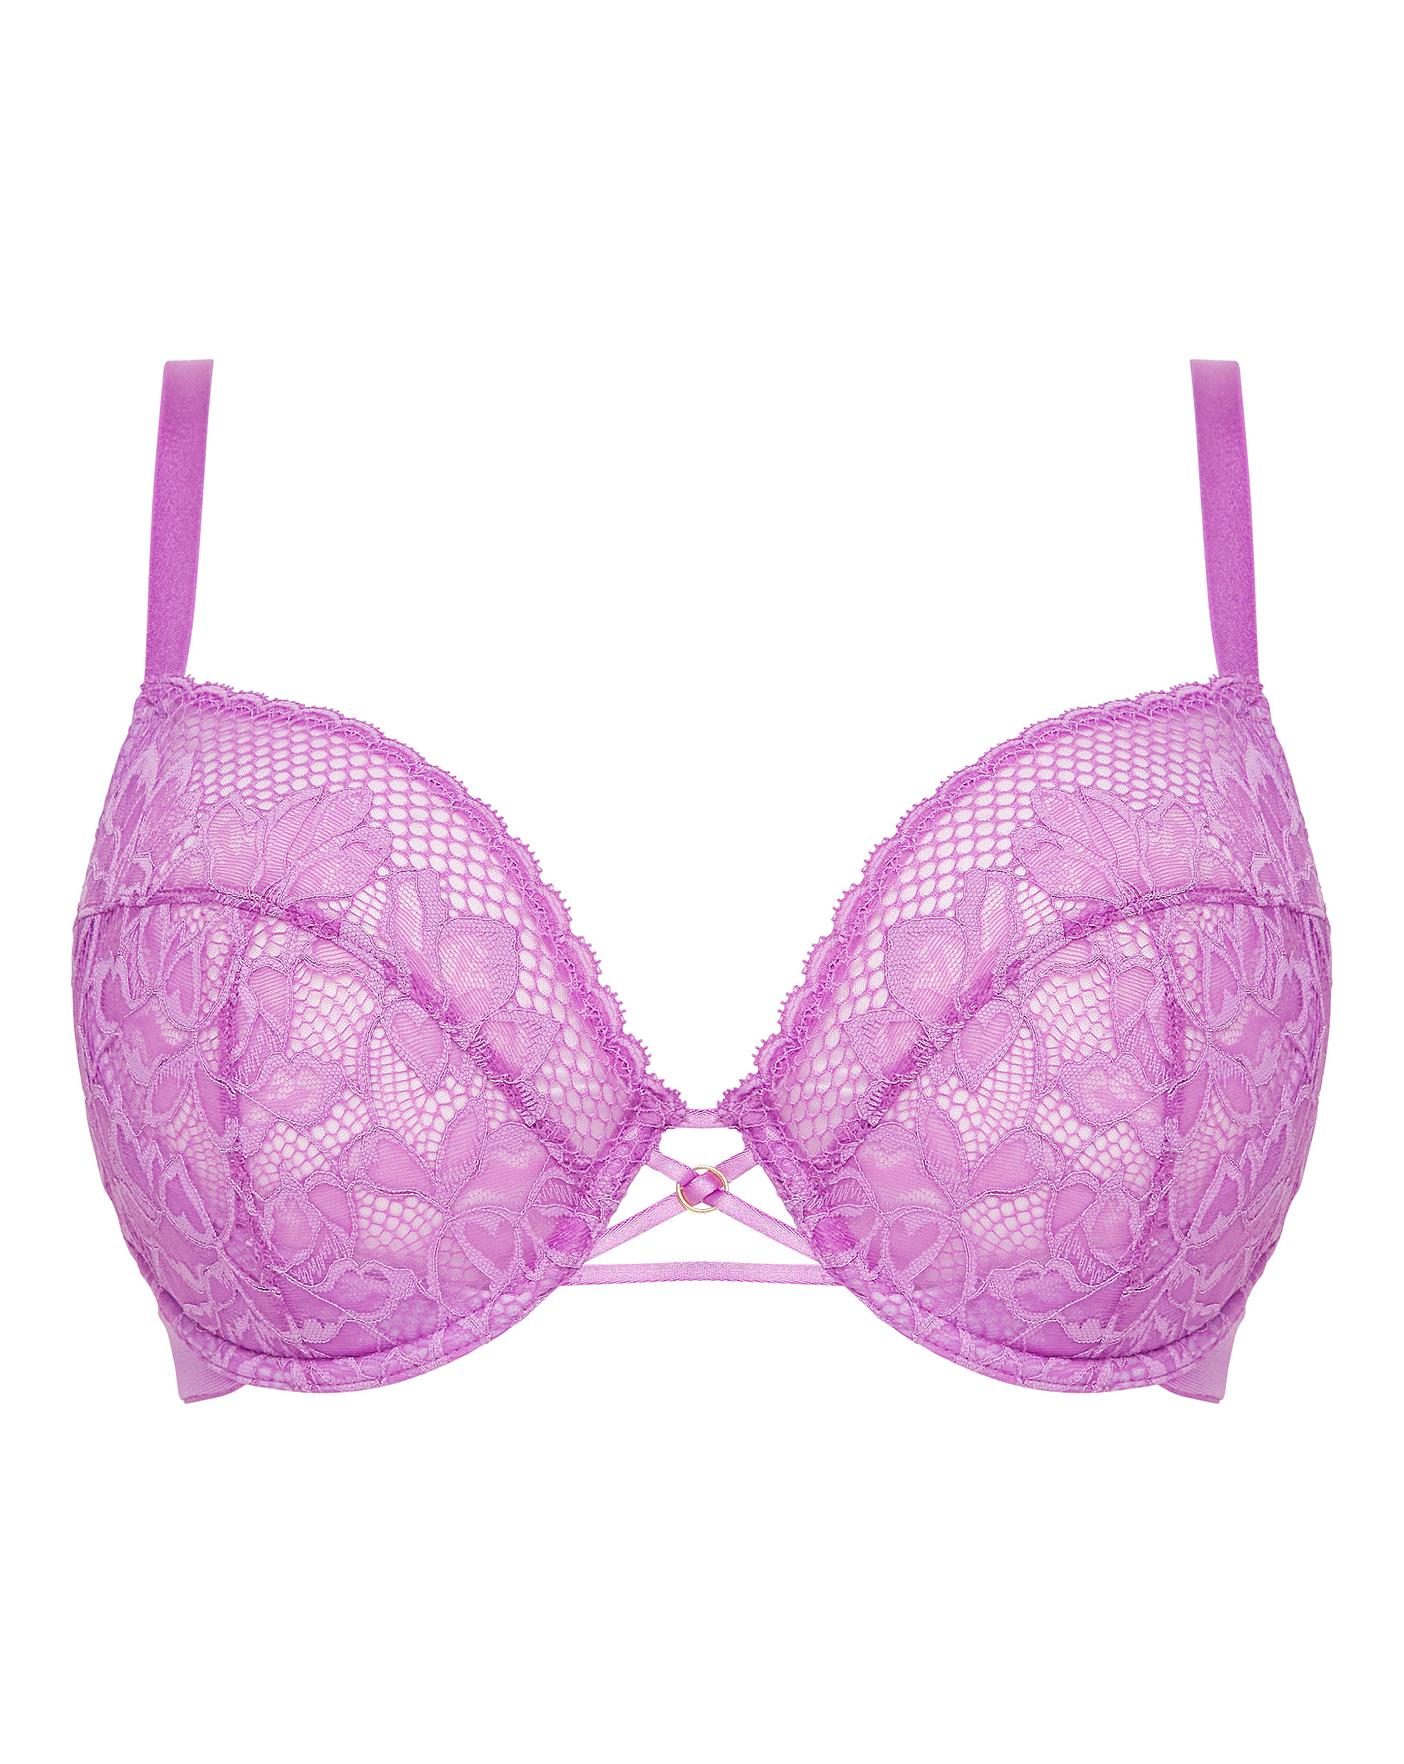 Victoria's Secret Purple Lace Body by Victoria Lined Denim Bra size 34DDD -  $17 - From Autumn